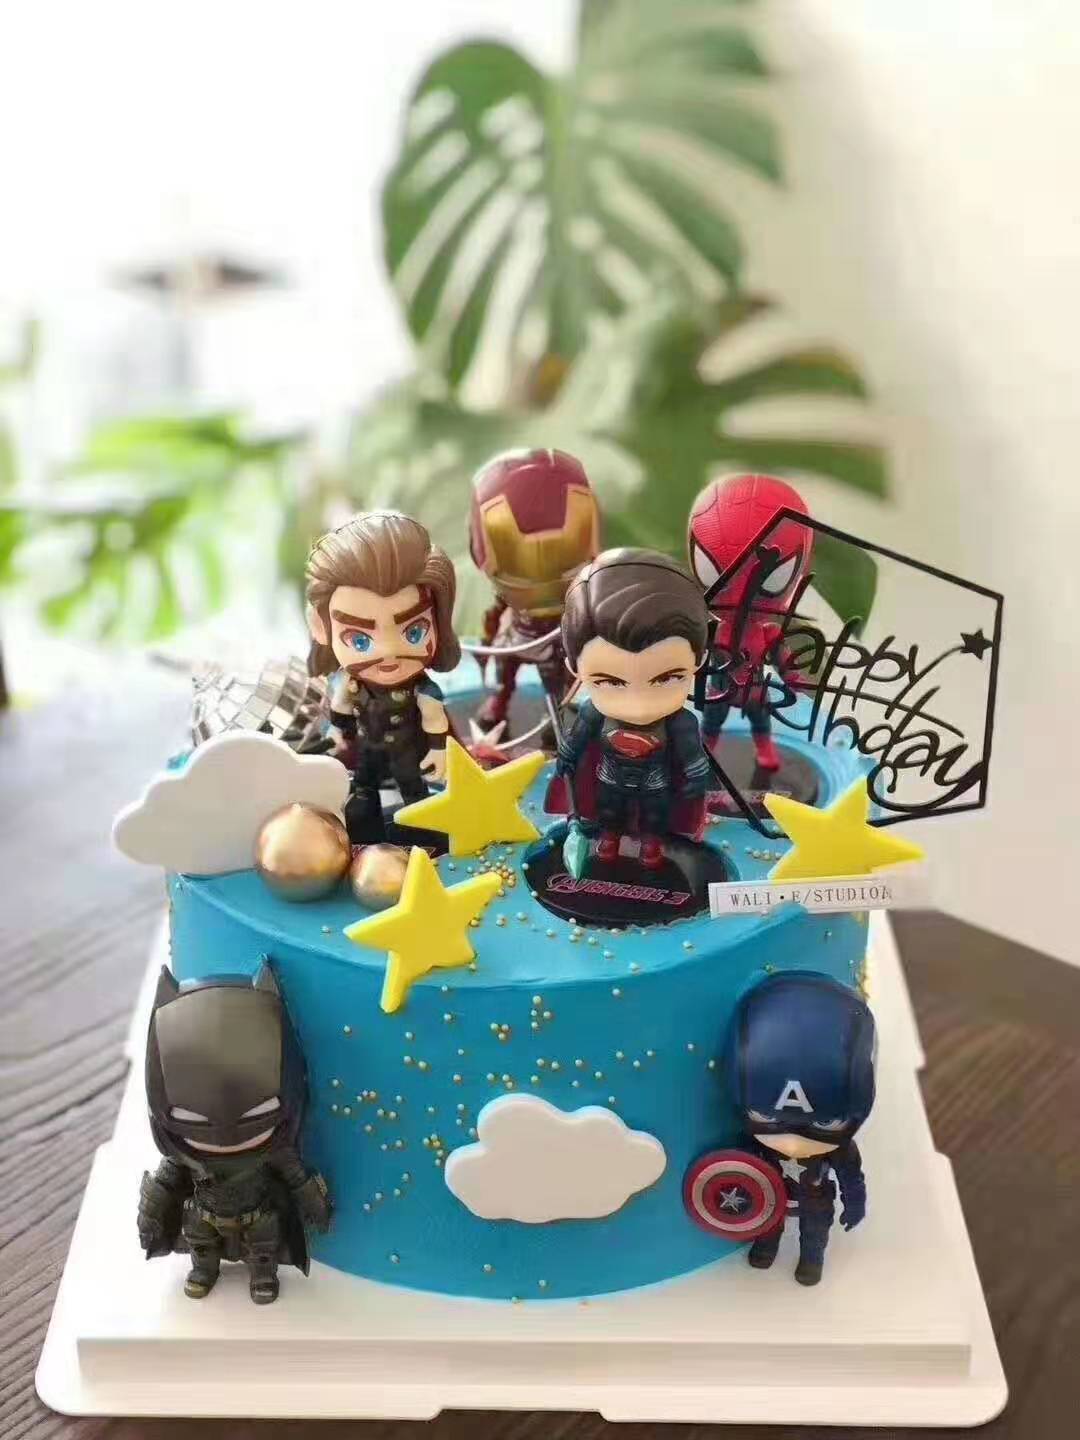 梅轩: 蜘蛛侠蛋糕 Spiderman cake